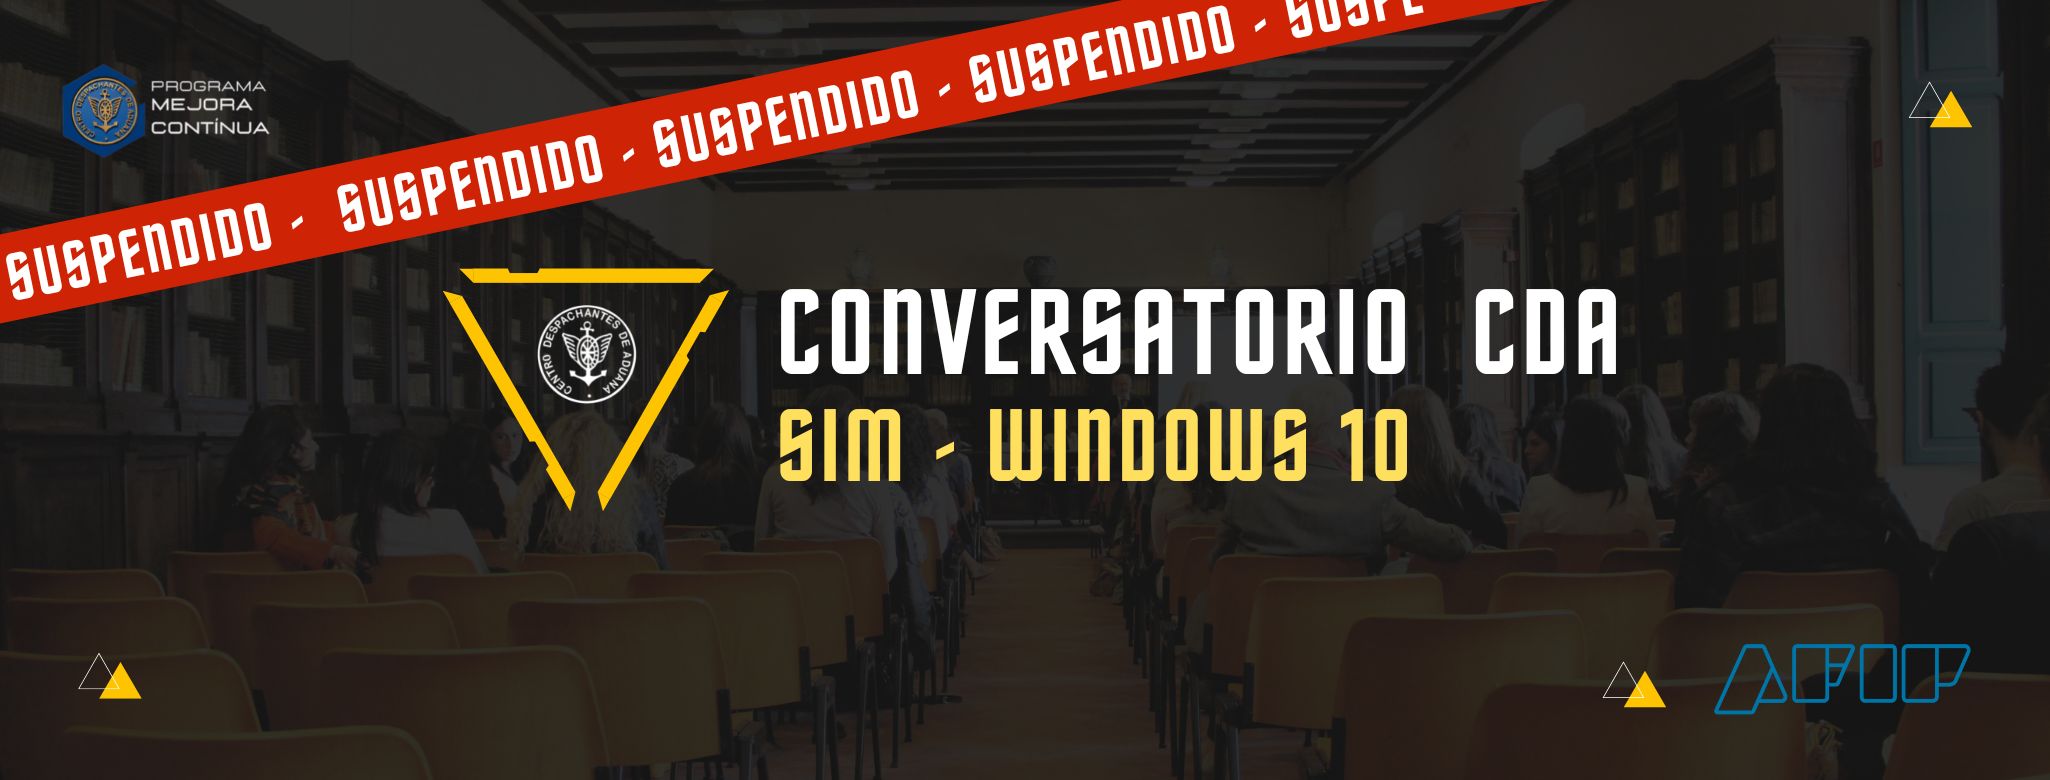 Conversatorios: SIM - Windows 10